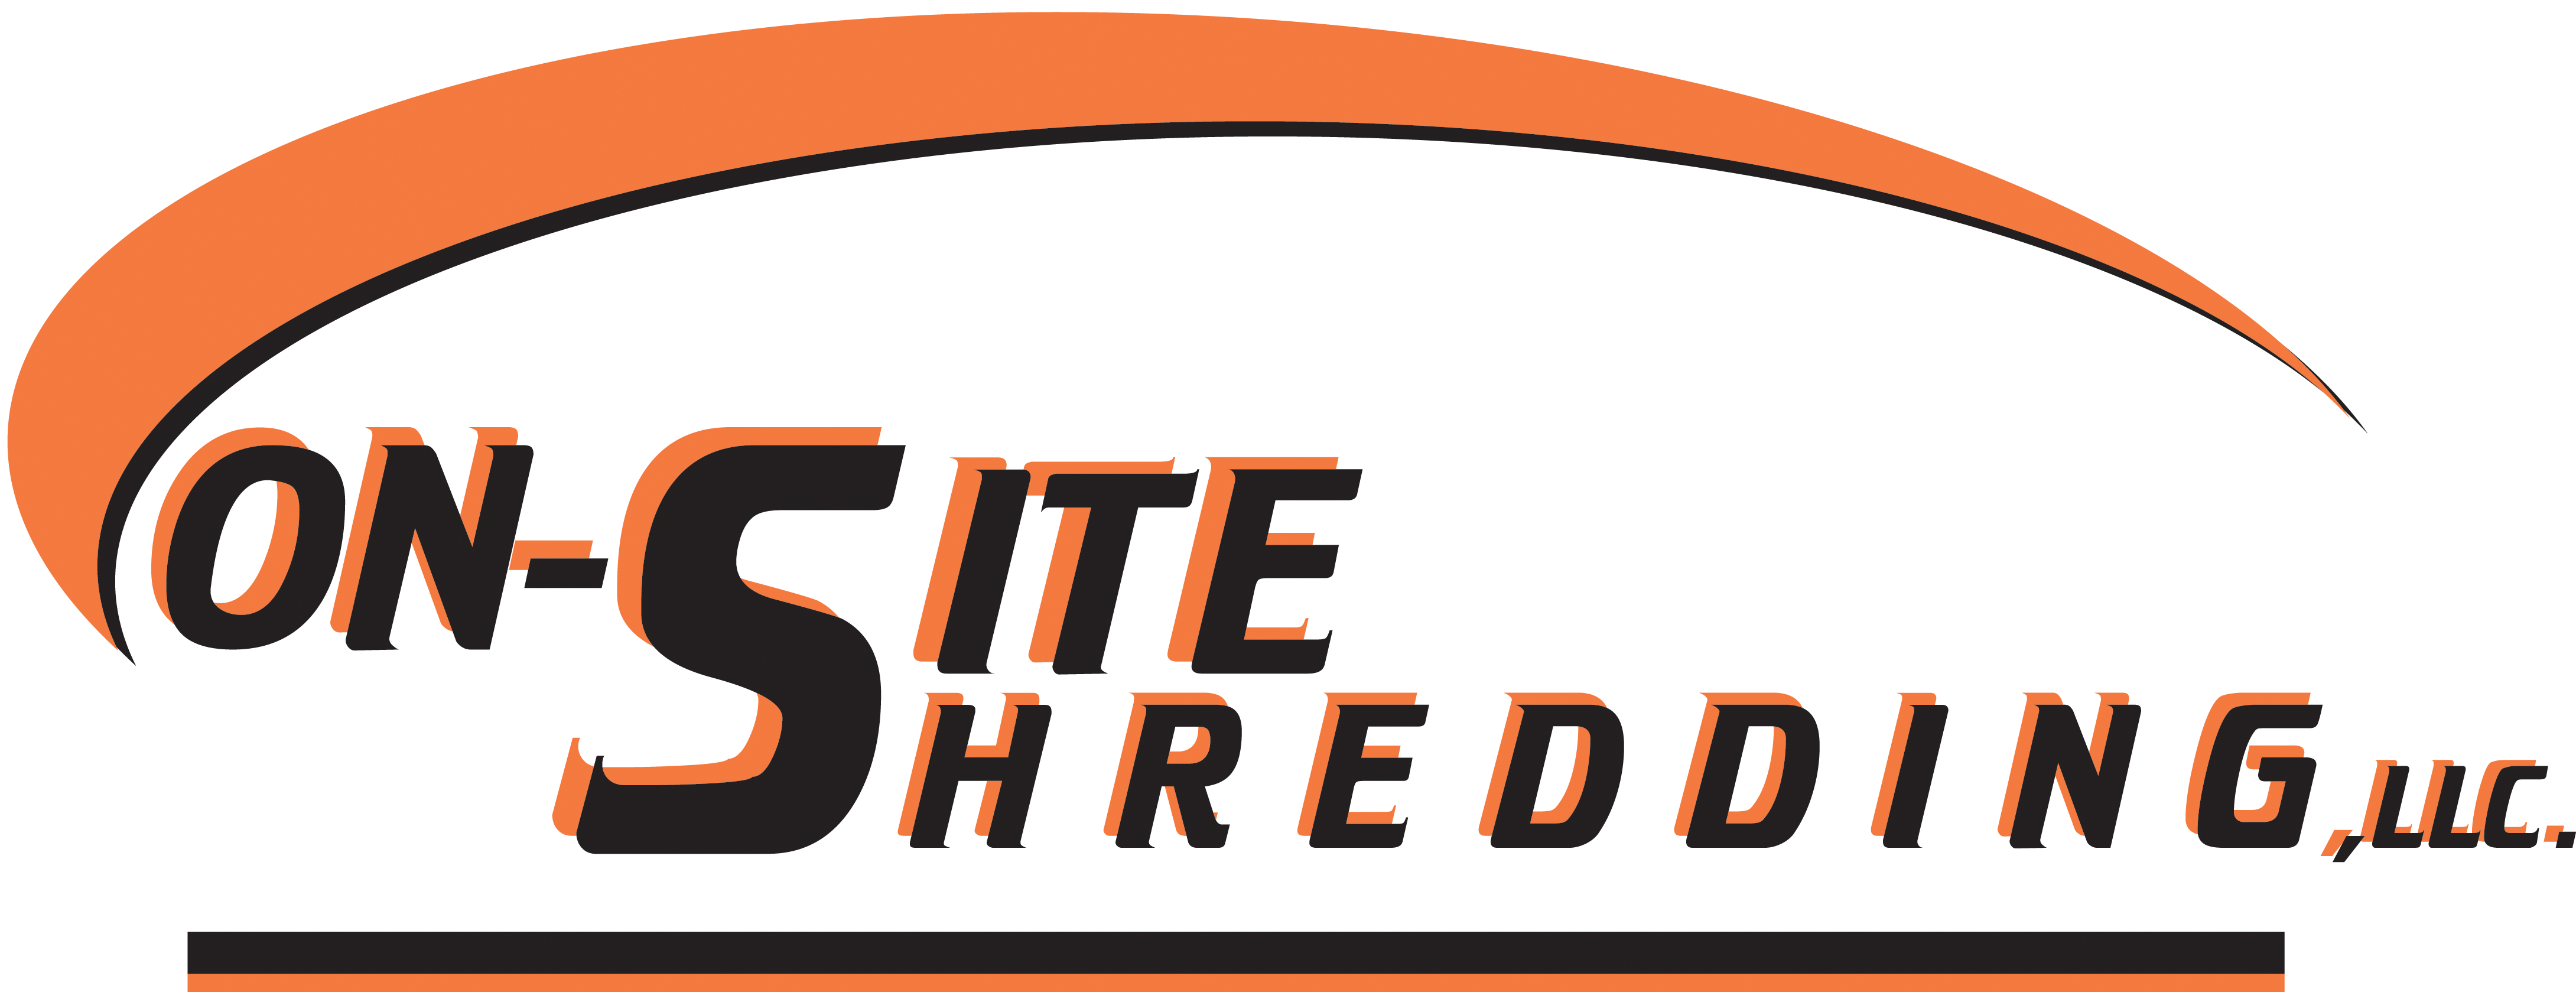 On site shredding company black and orange logo